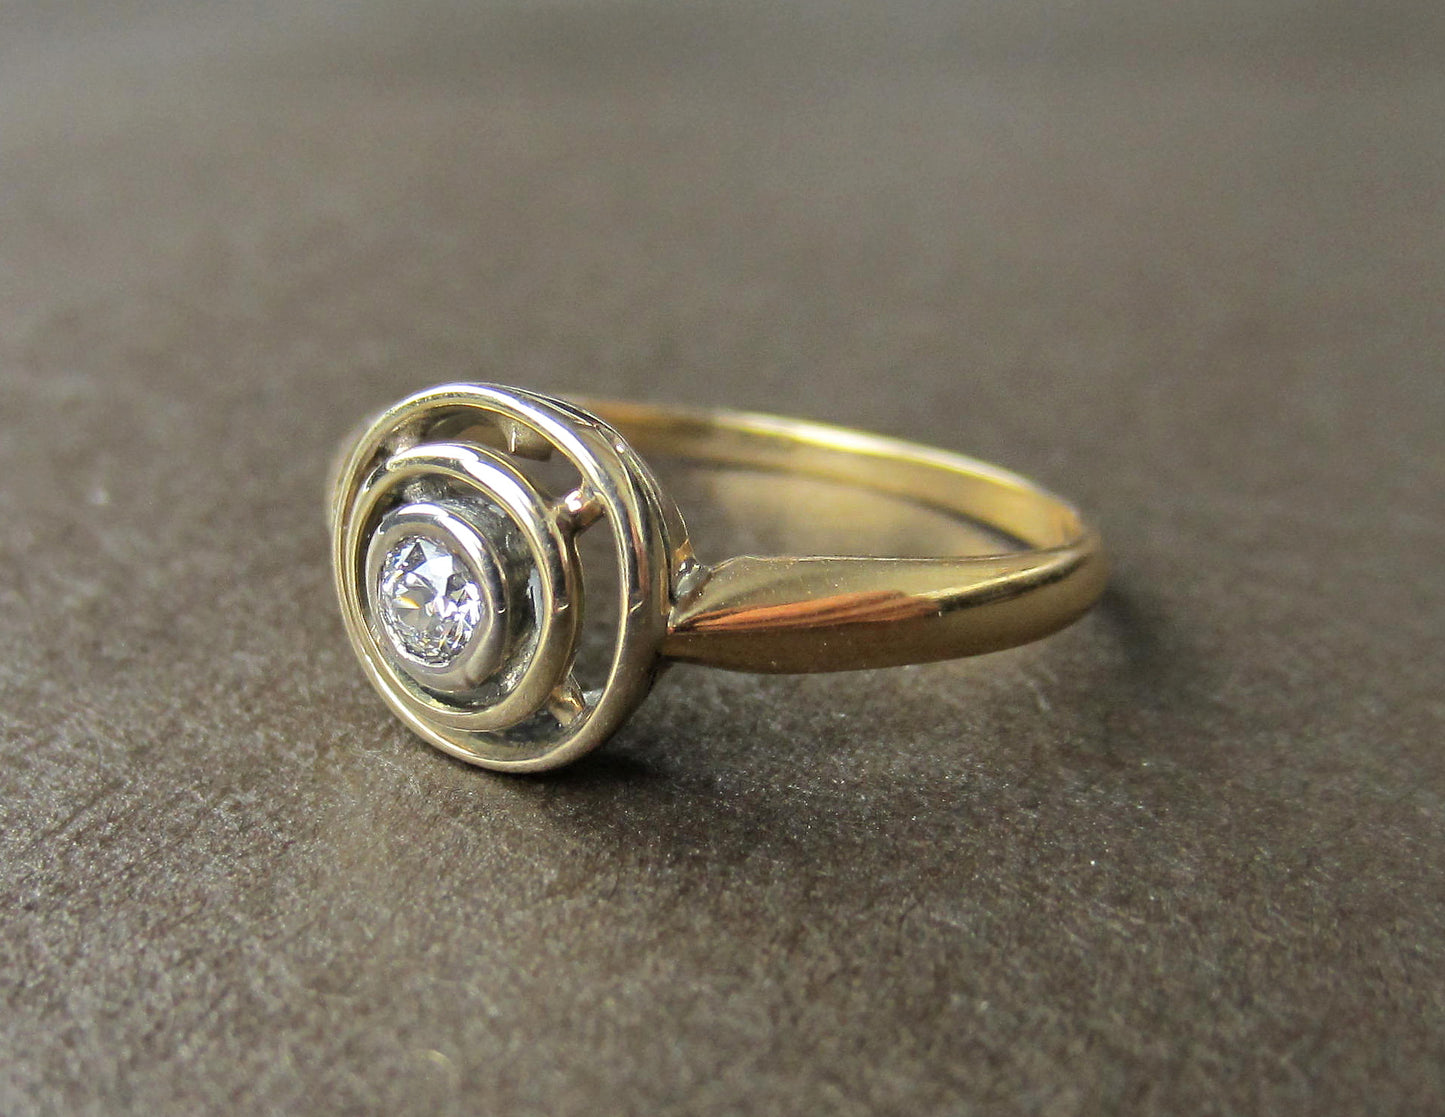 SOLD-Art Deco Old European Diamond Target Engagement Ring 14k c. 1930